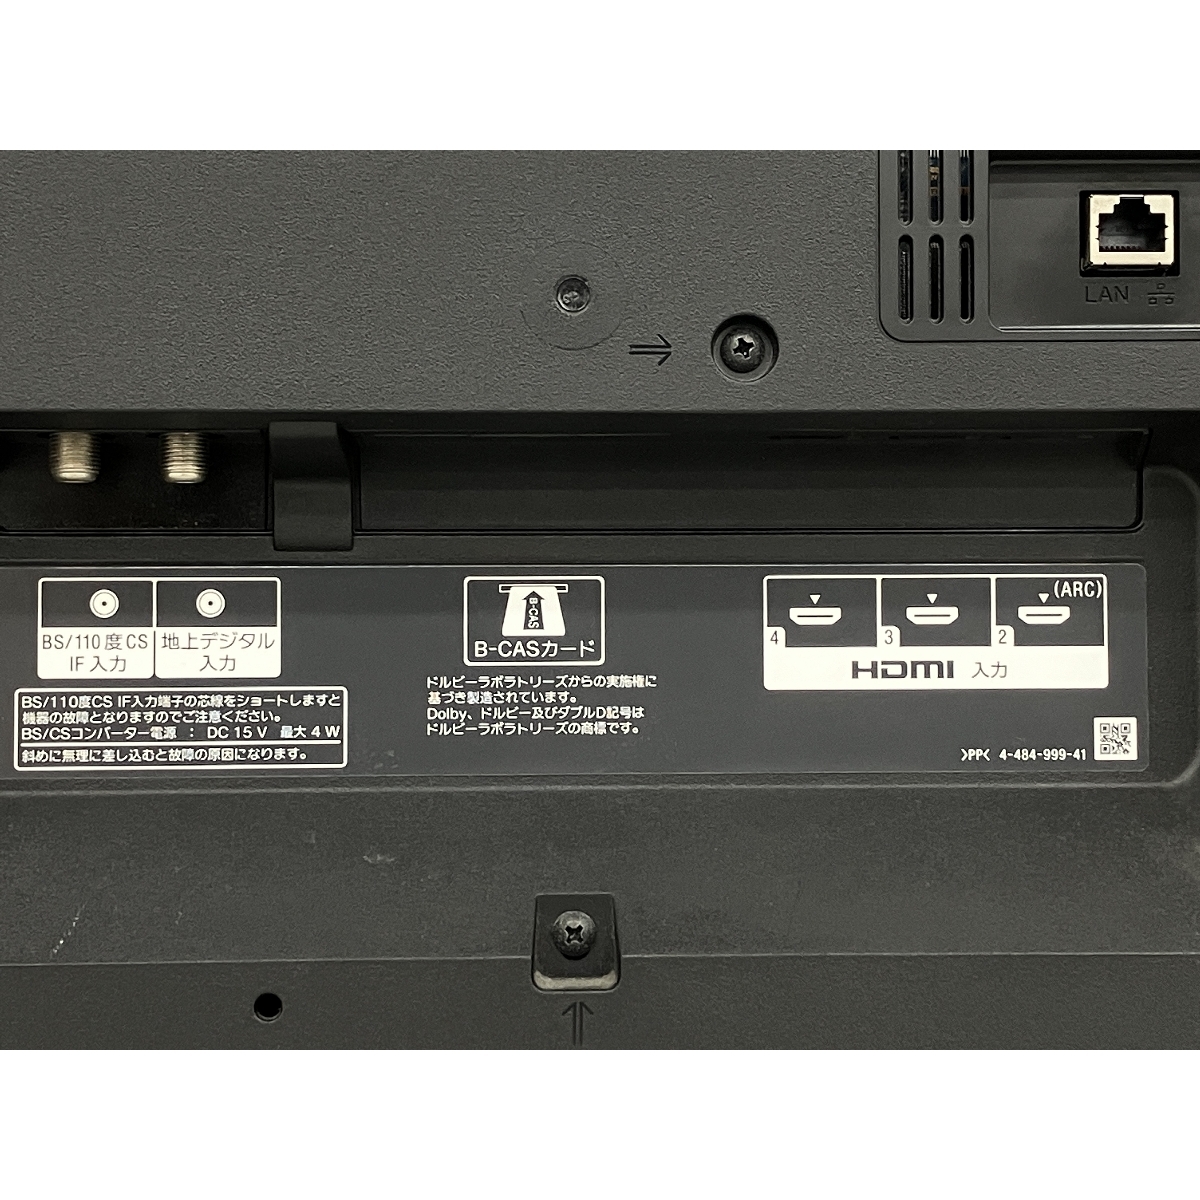 [ гарантия работы ] SONY Sony KDL-32W700B BRAVIA 32V модели жидкокристаллический ТВ-монитор 2014 год производства б/у K8841135